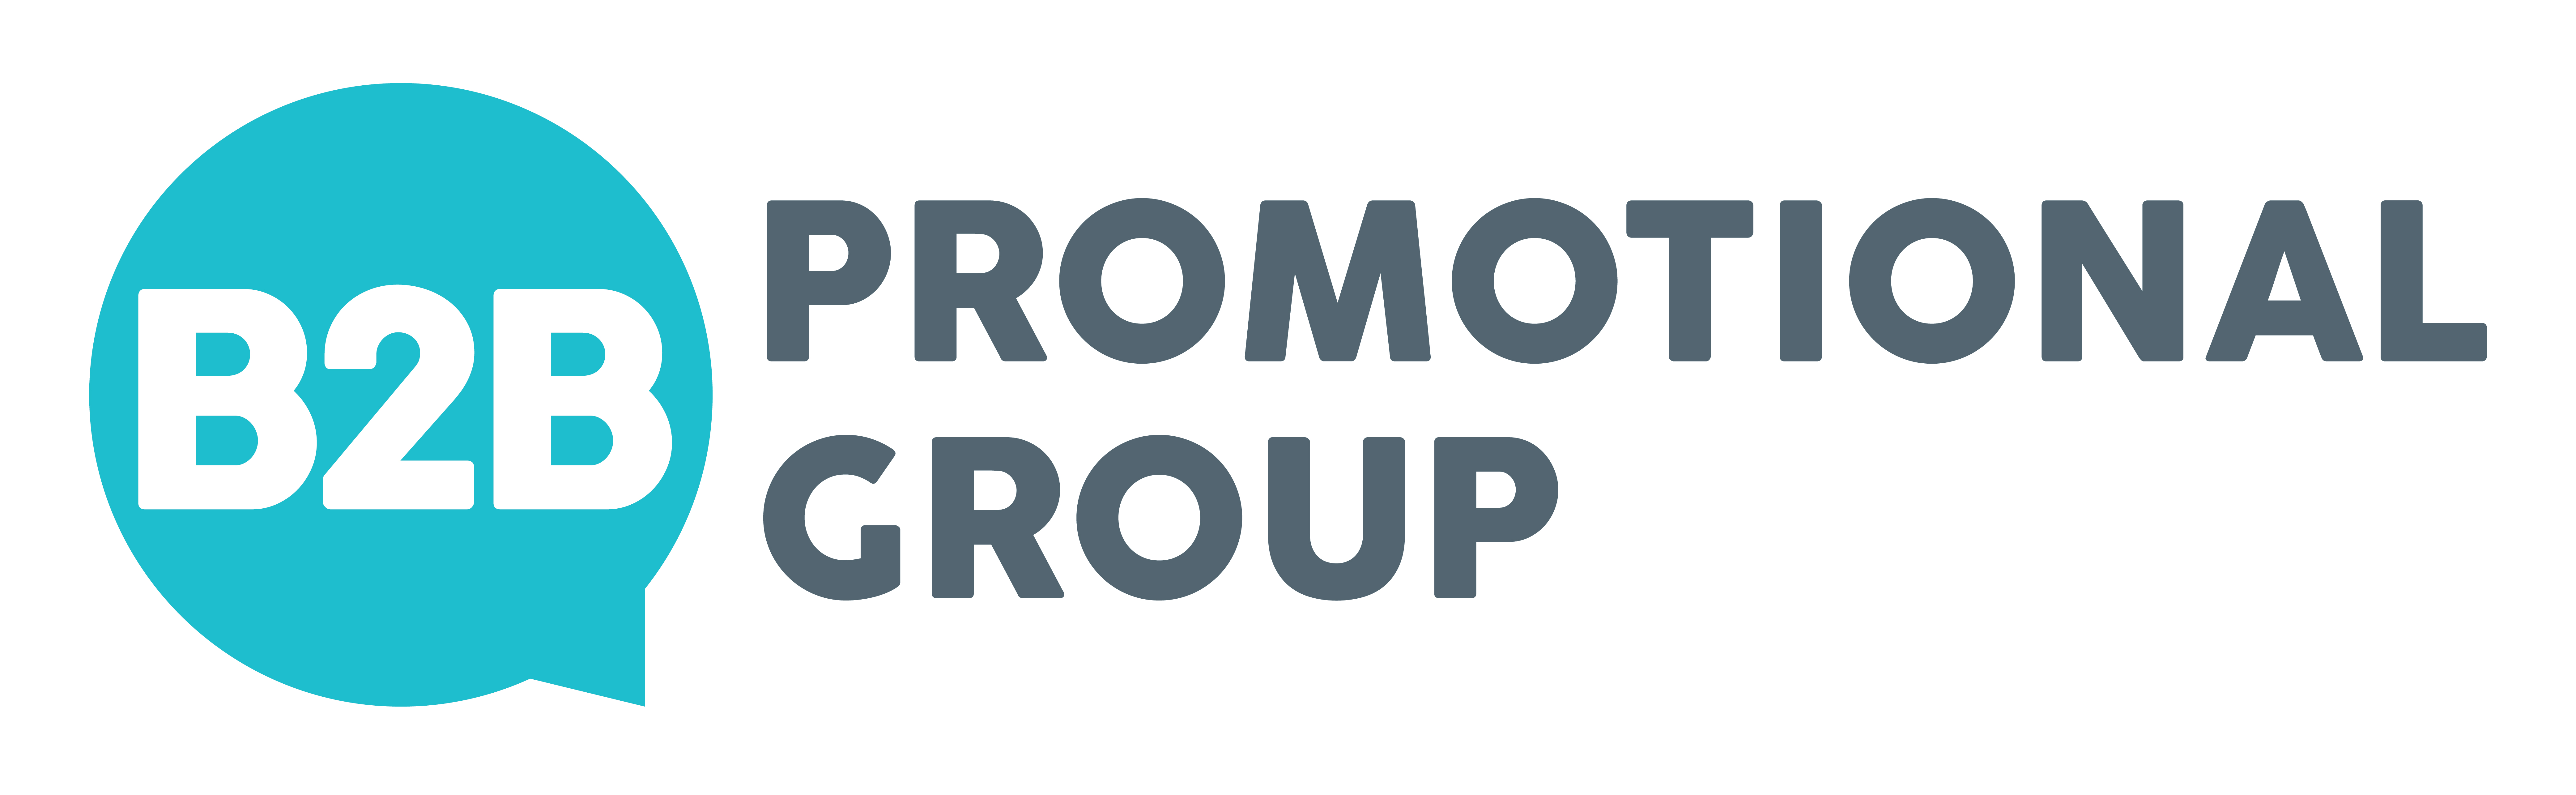 B2B Promotional Group's Logo